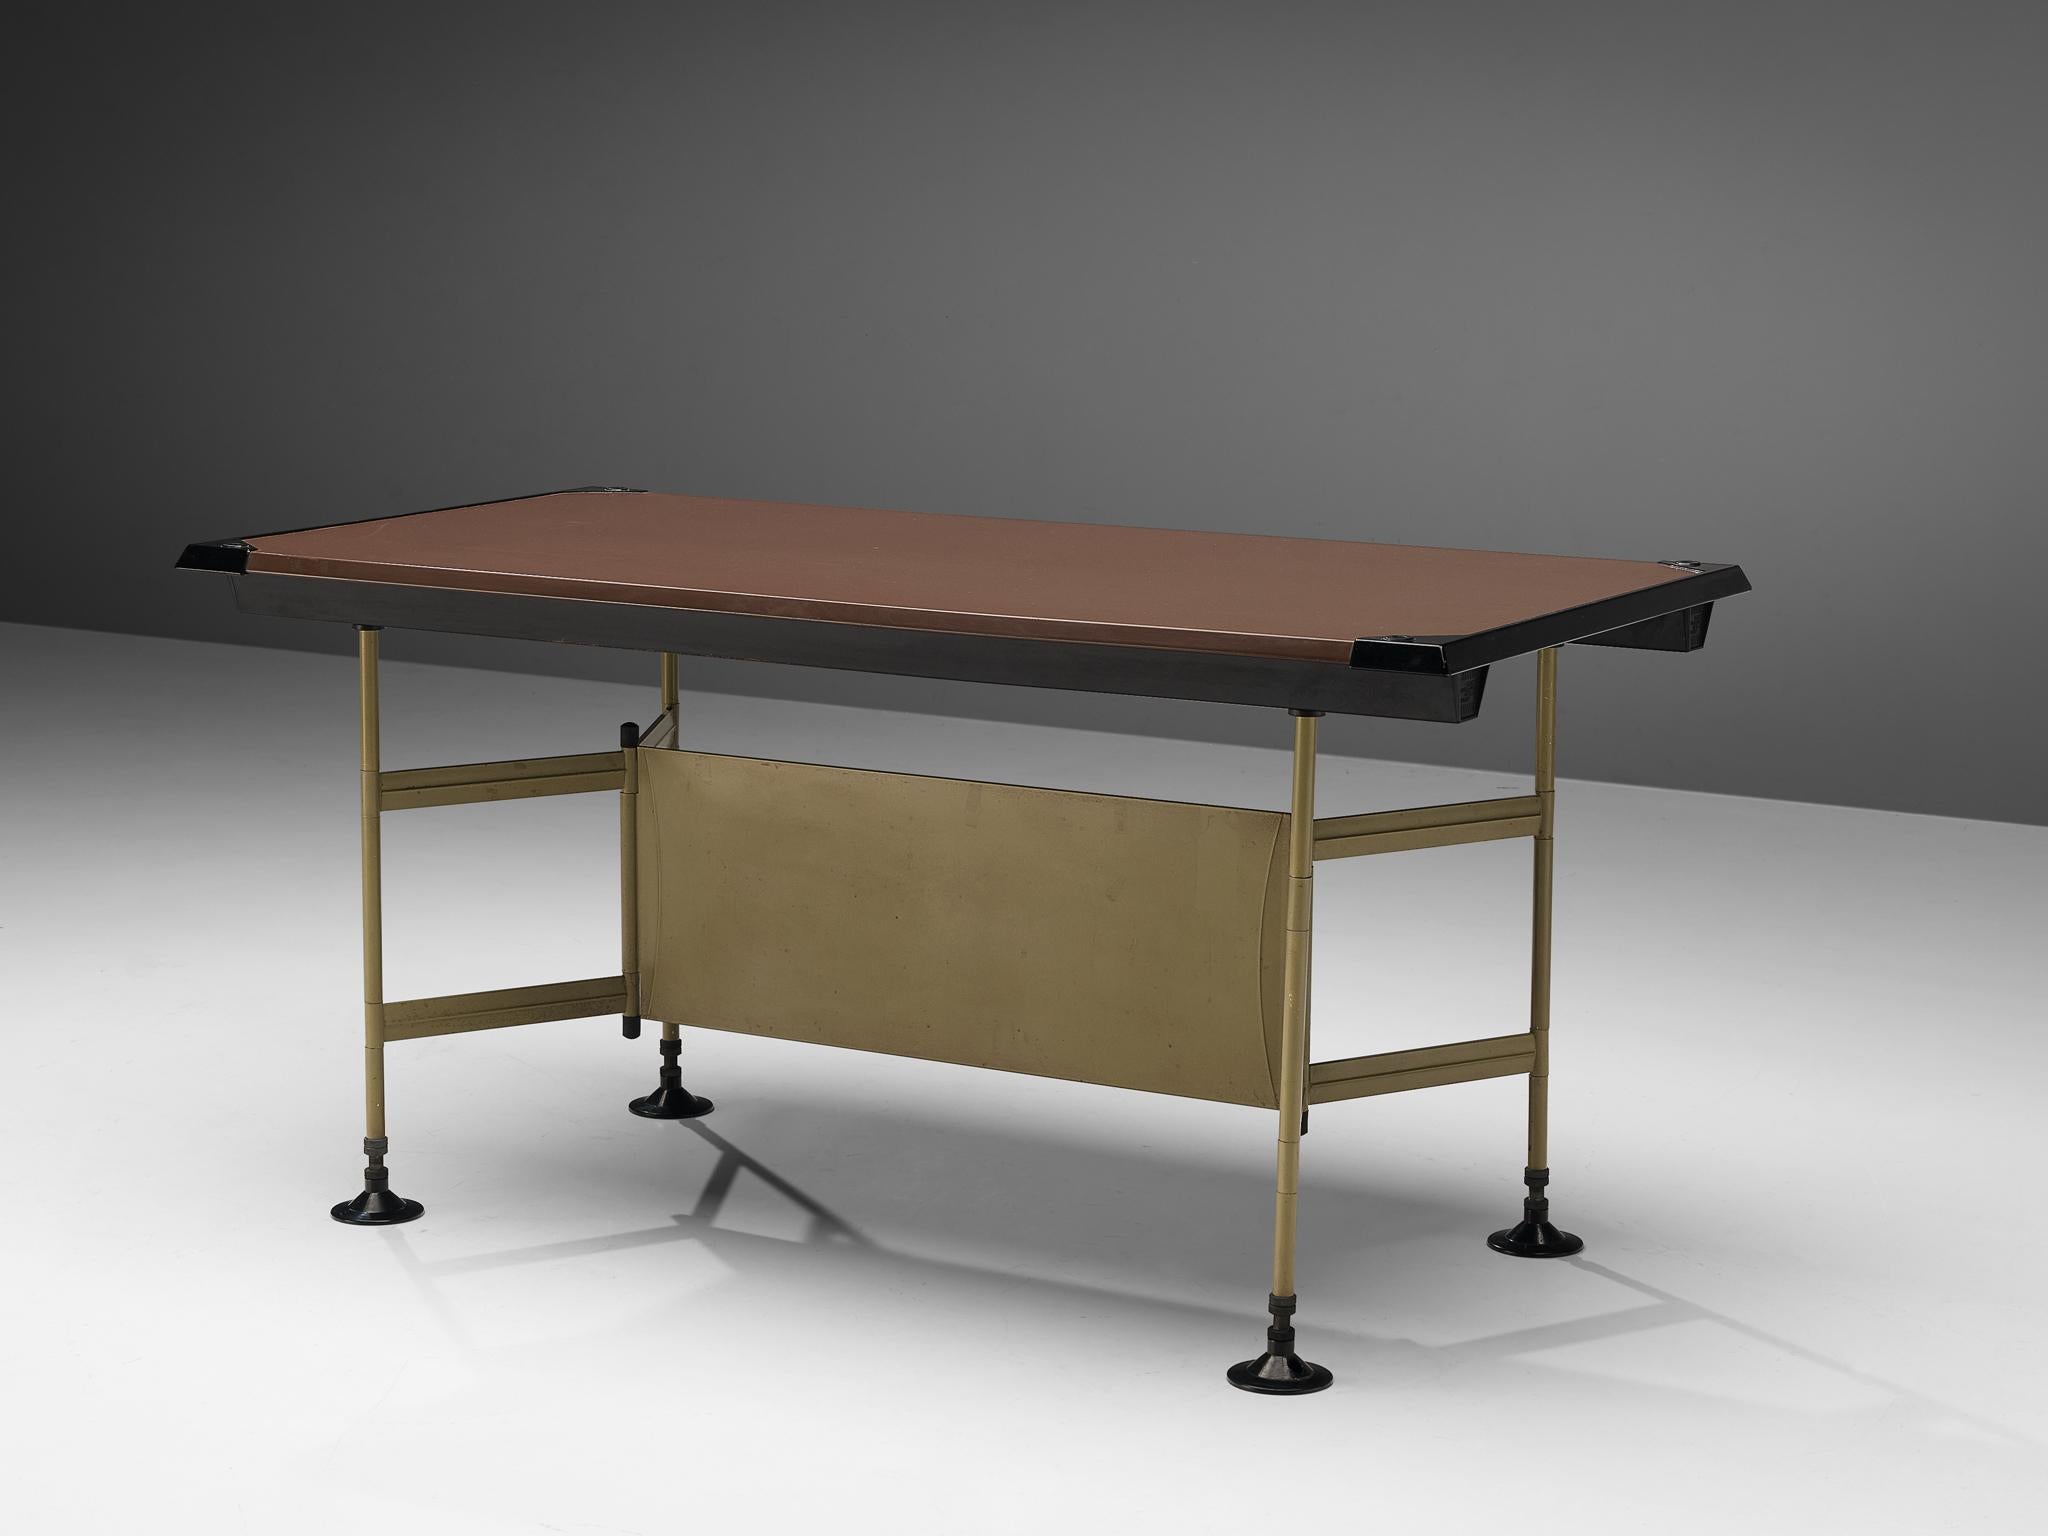 Studio BBPR for Olivetti, 'Spazio' table, steel, vinyl, plastic, Italy, ca. 1960 

The 'Spazio' series was designed by Studio BBPR for Olivetti in 1960. It won the Compasso d'Oro Award in 1962. Today the desk of the 'Spazio' series is featured in